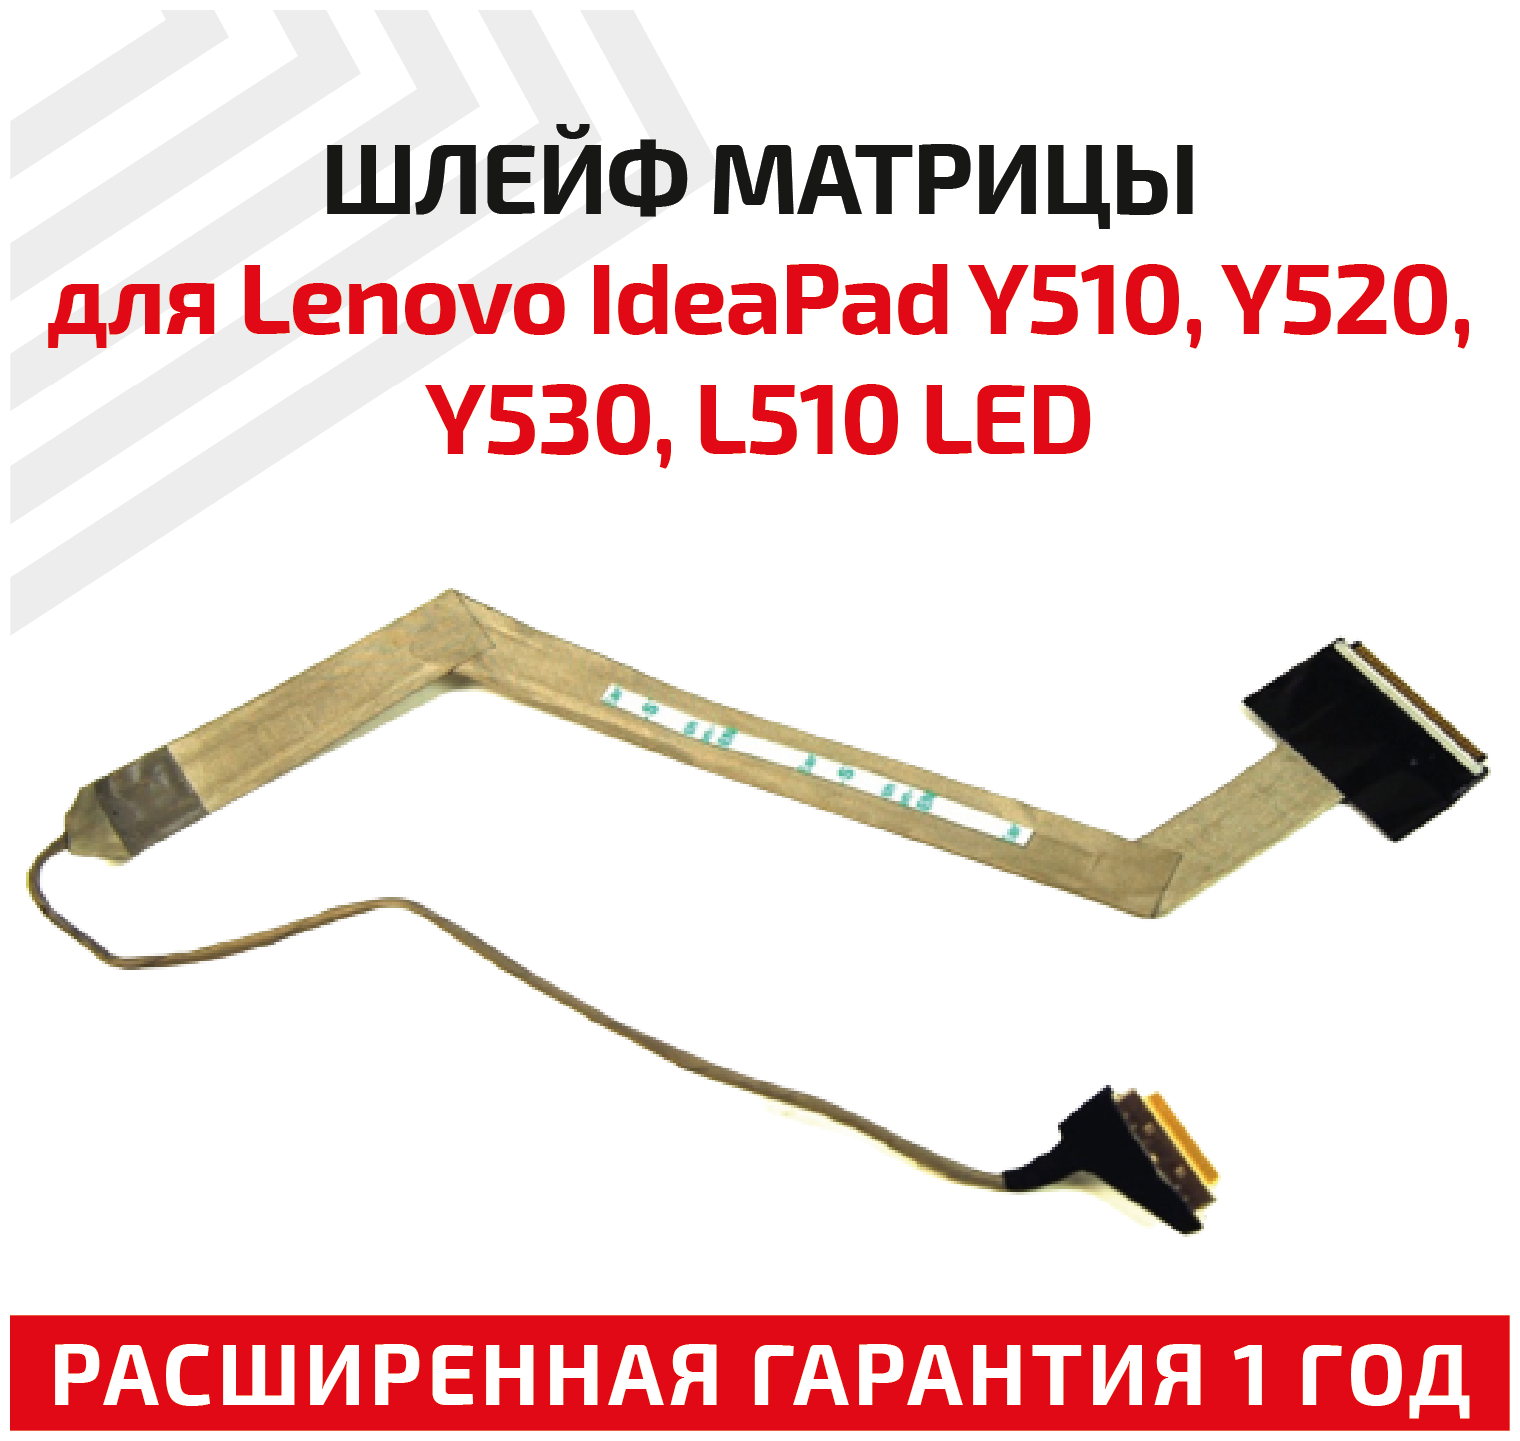 Шлейф матрицы для ноутбука Lenovo IdeaPad Y510 Y520 Y530 L510 LED 7105100